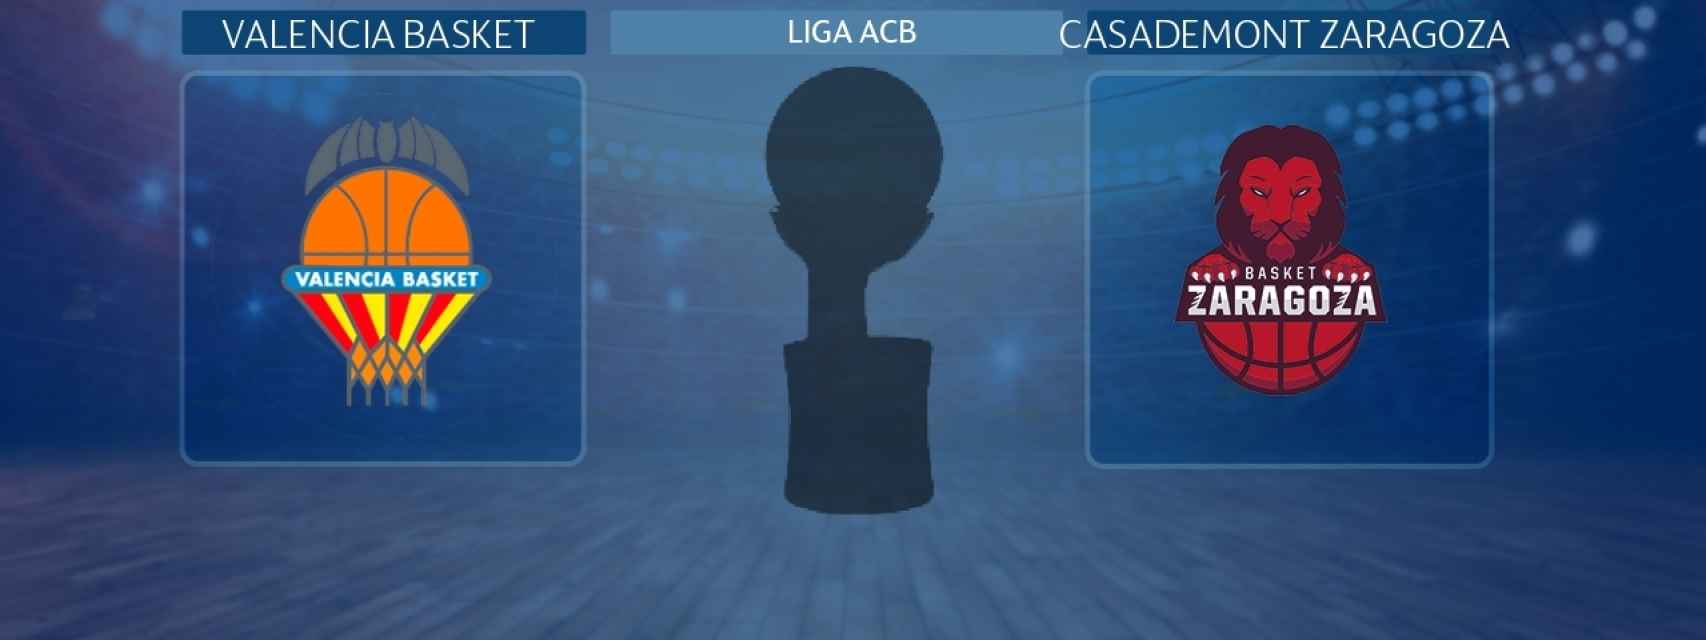 Valencia Basket - Casademont Zaragoza, partido de Liga ACB